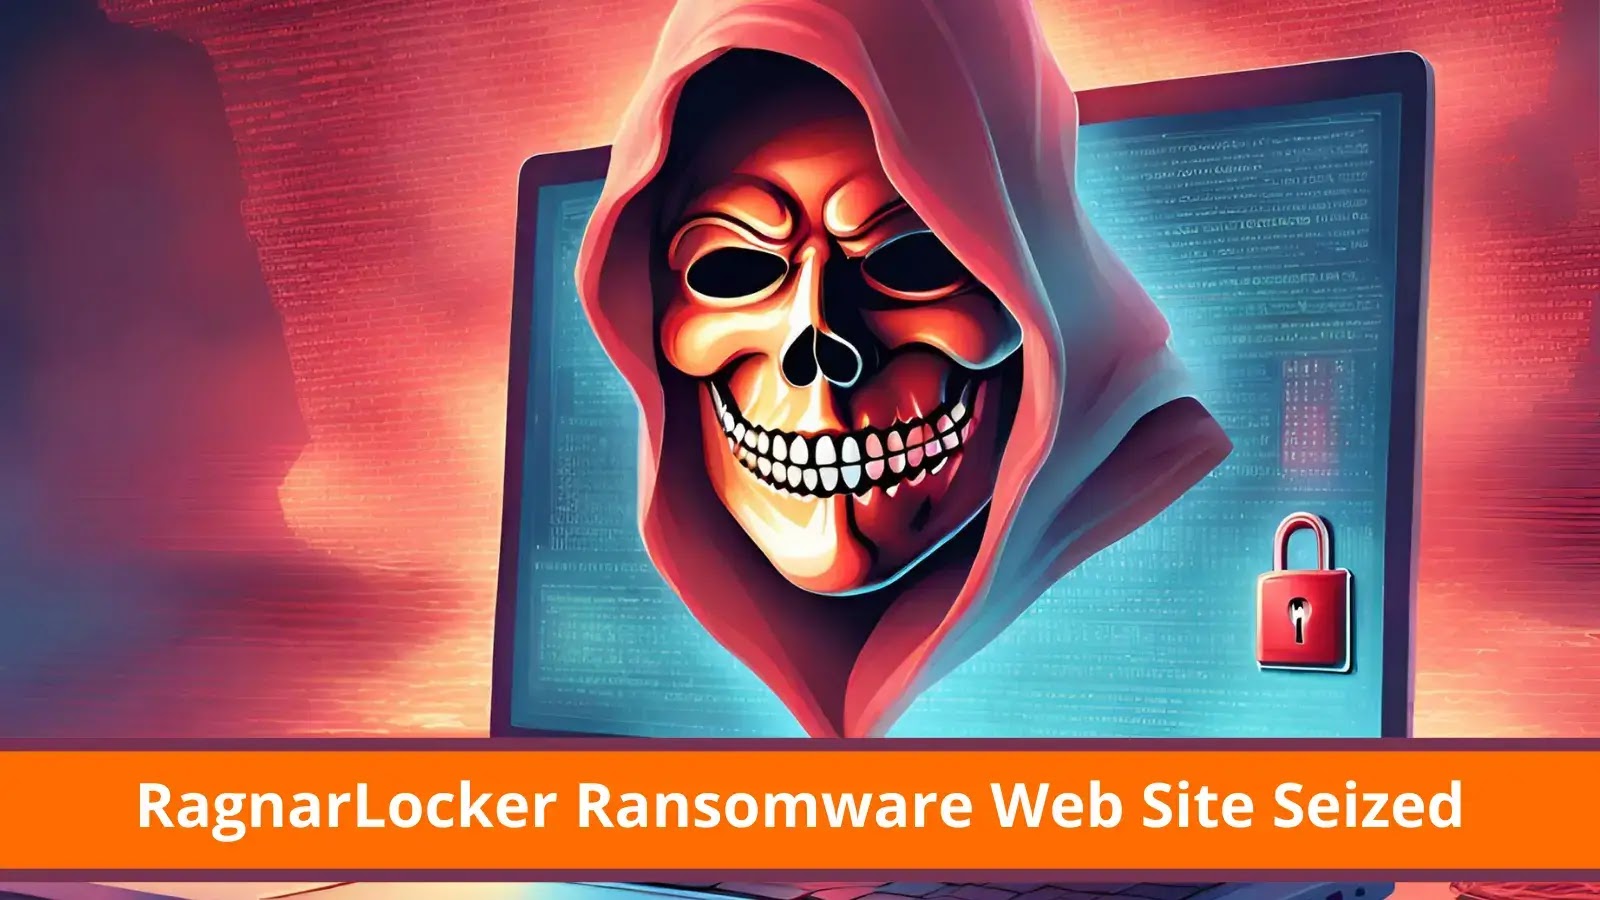 Authorities Seized RagnarLocker Ransomware Dark Web Site